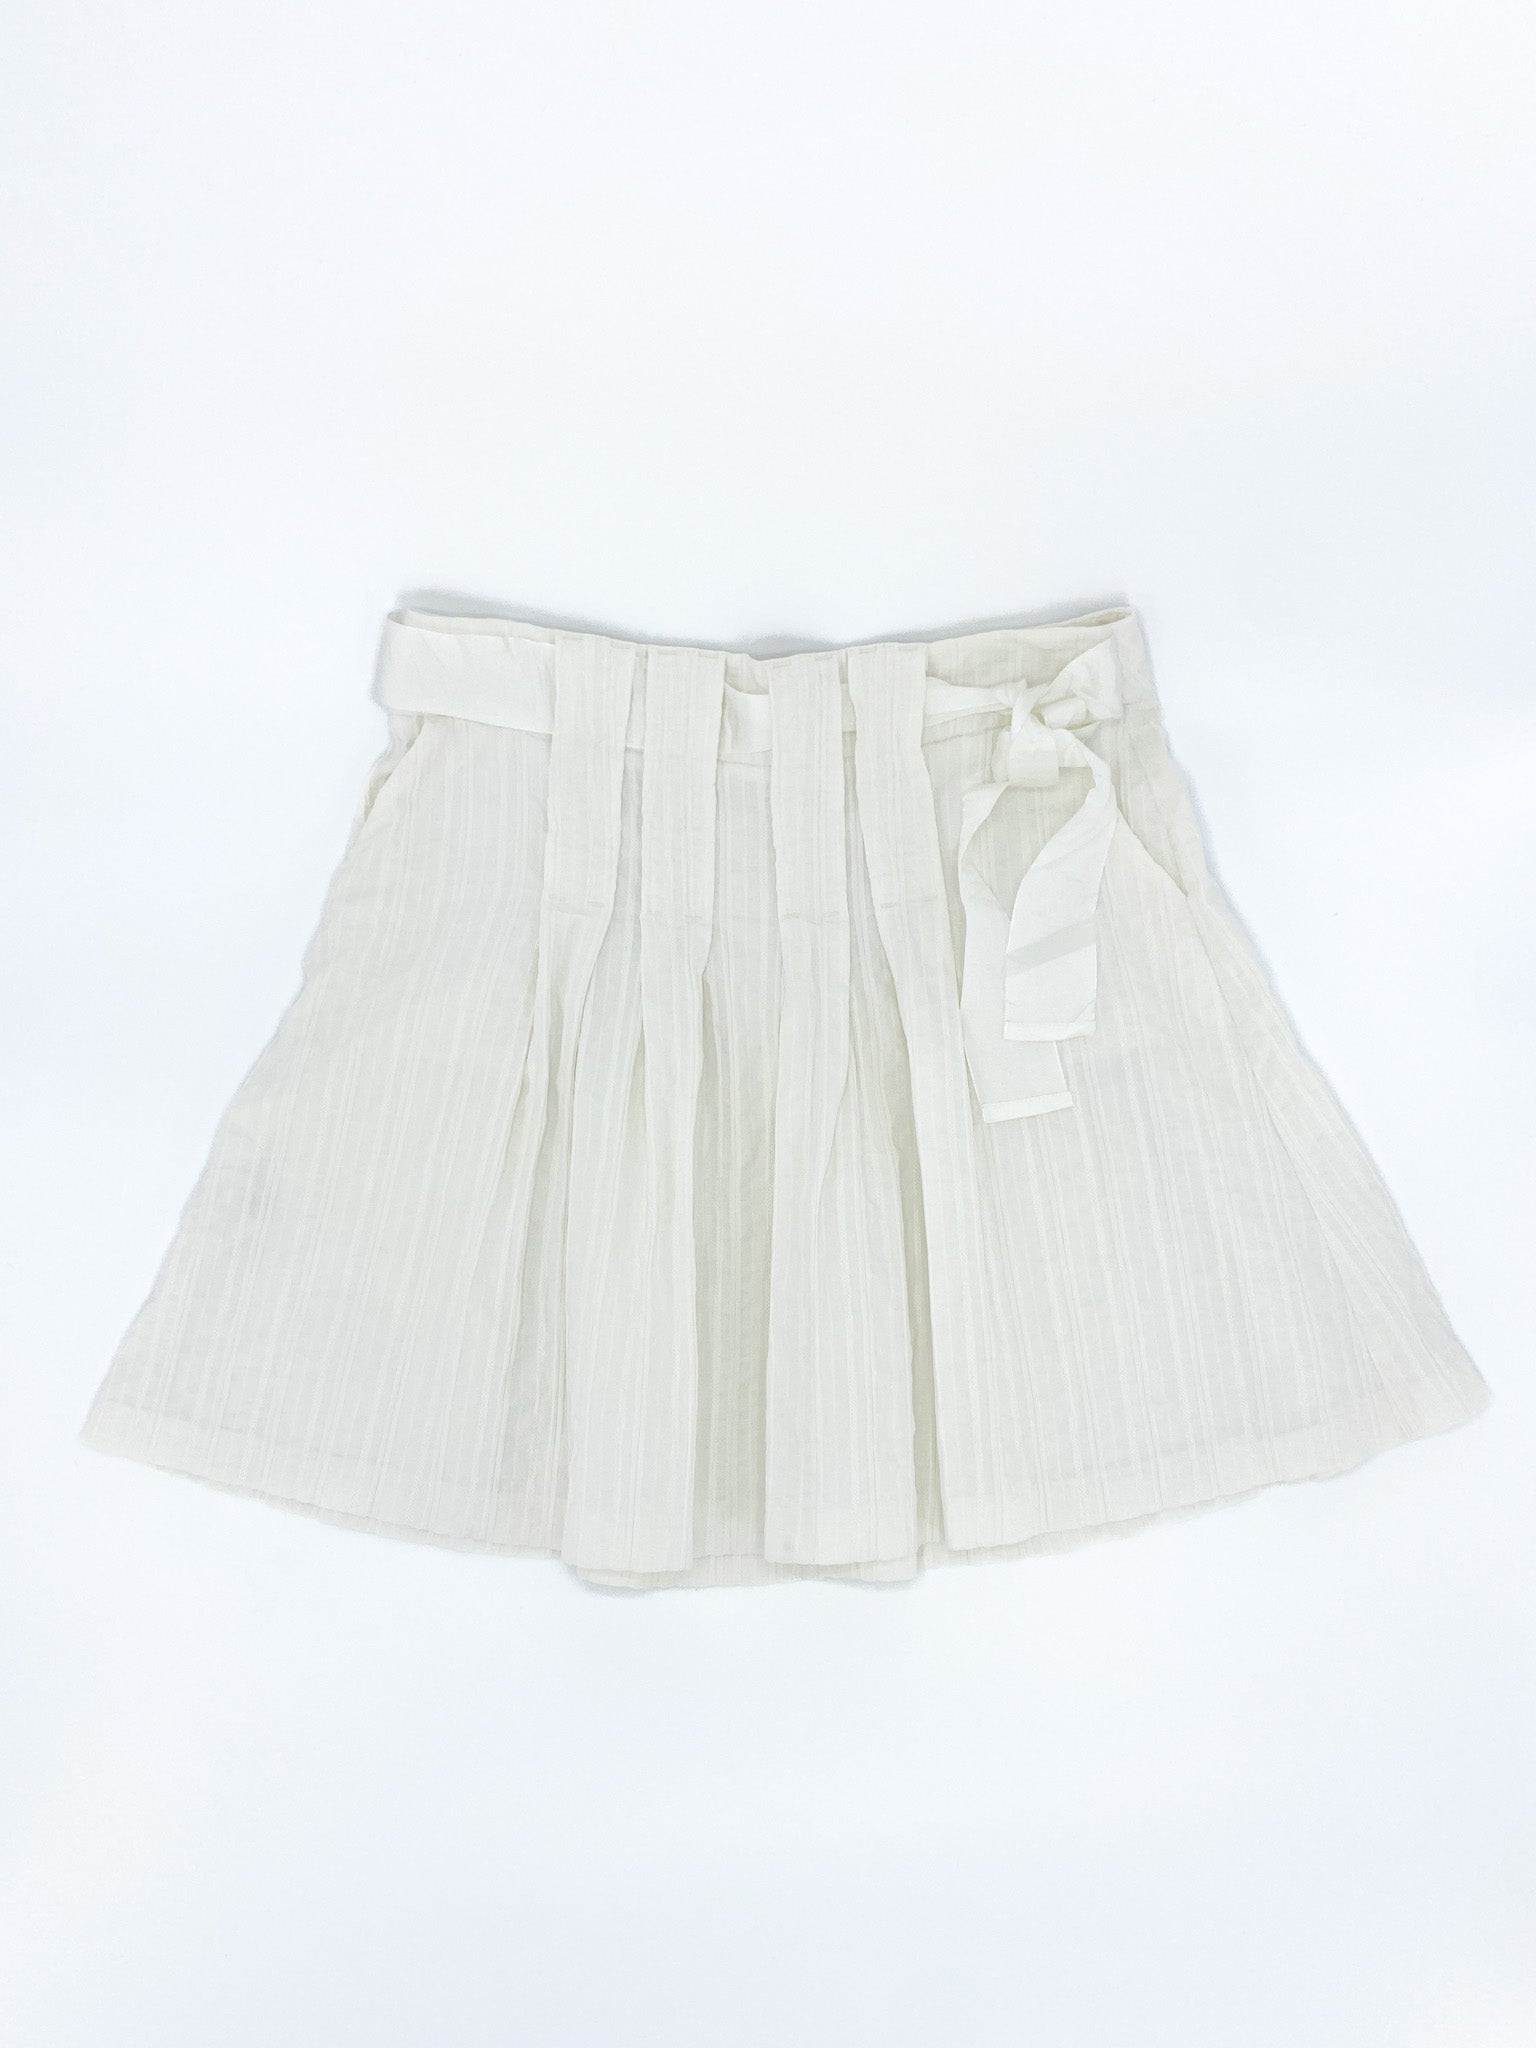 Vintage 00's White Midi Skirt - M - Playground Vintage